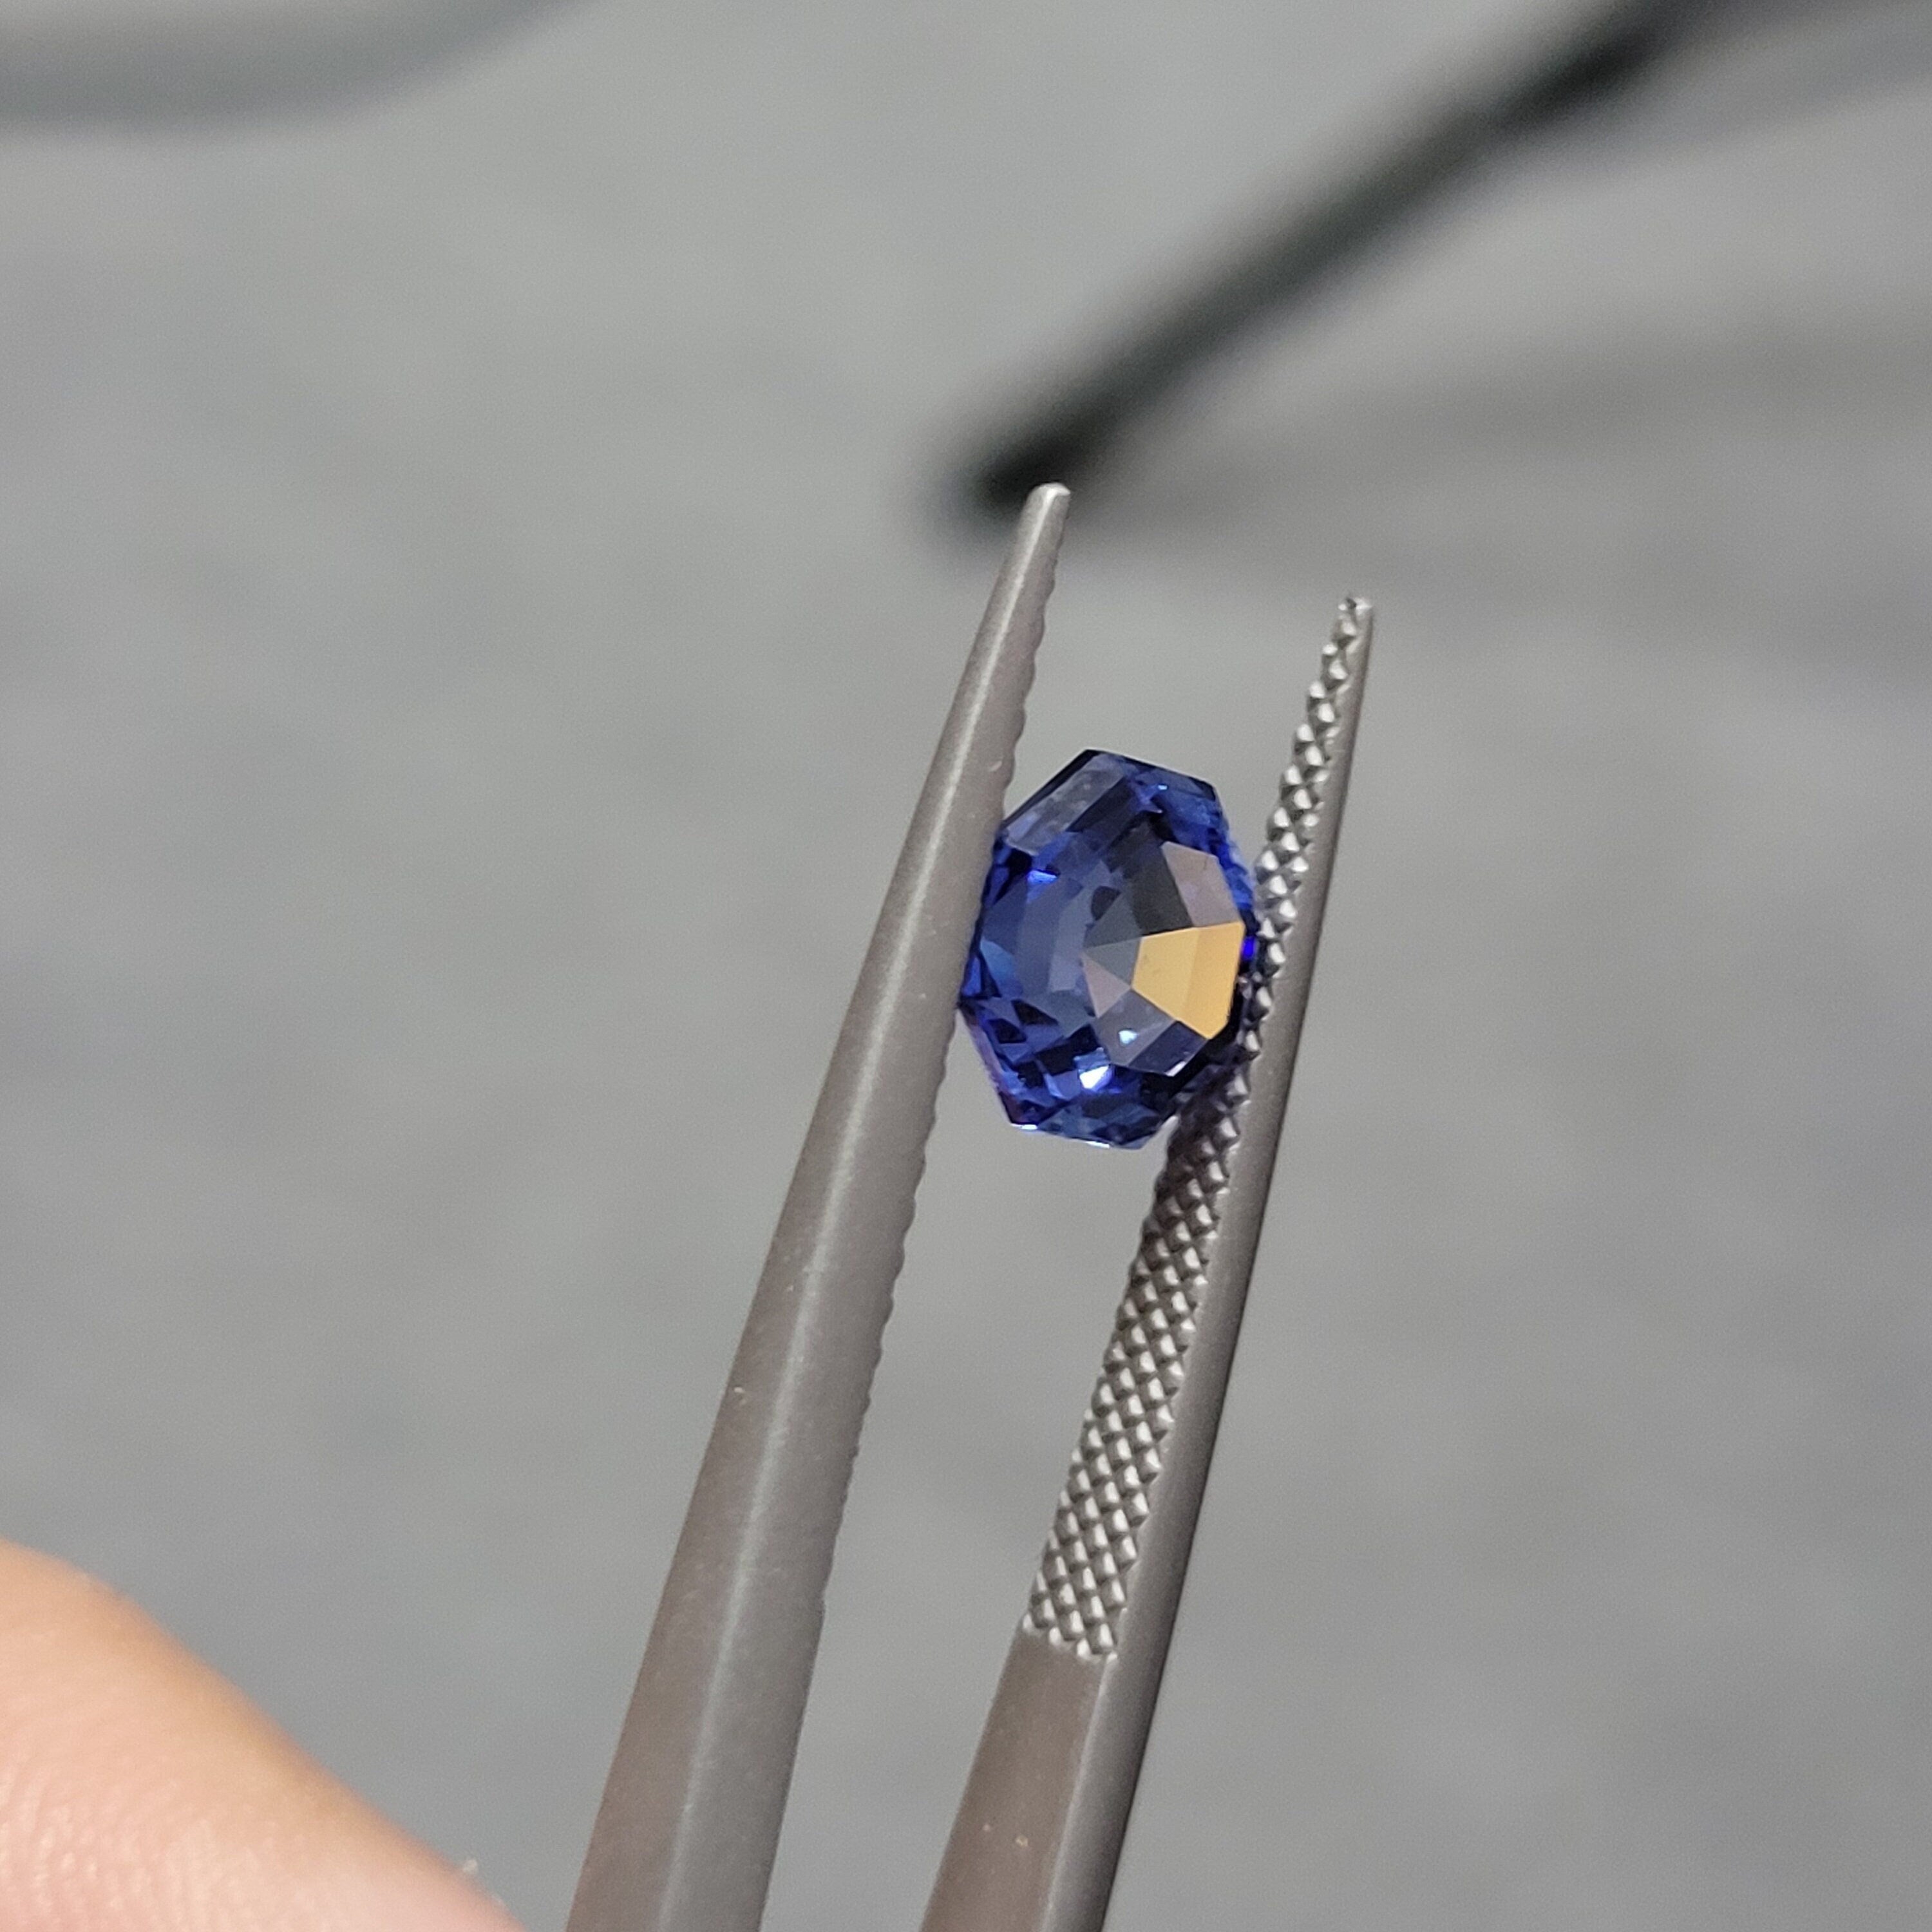 7mm loose  sapphire 2.16ct lab grown octagon cut, ceylon sapphire, blue gemstone